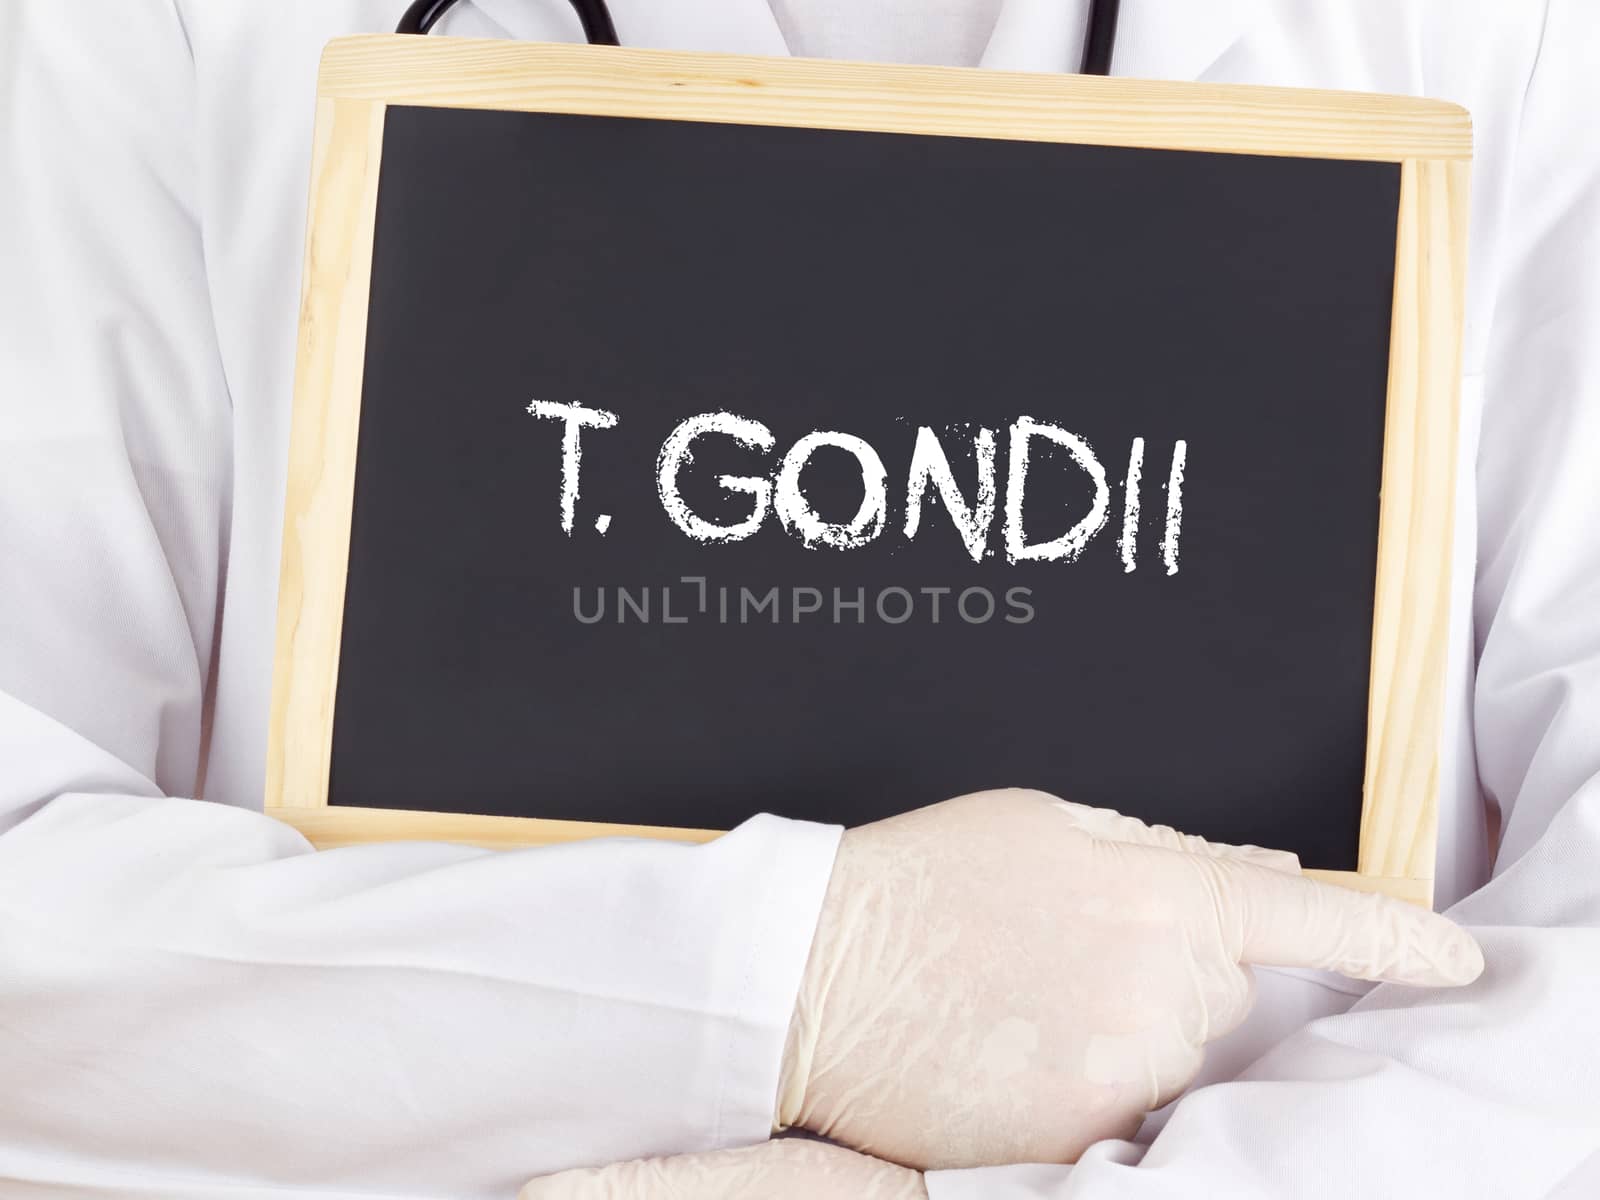 Doctor shows information: T gondii